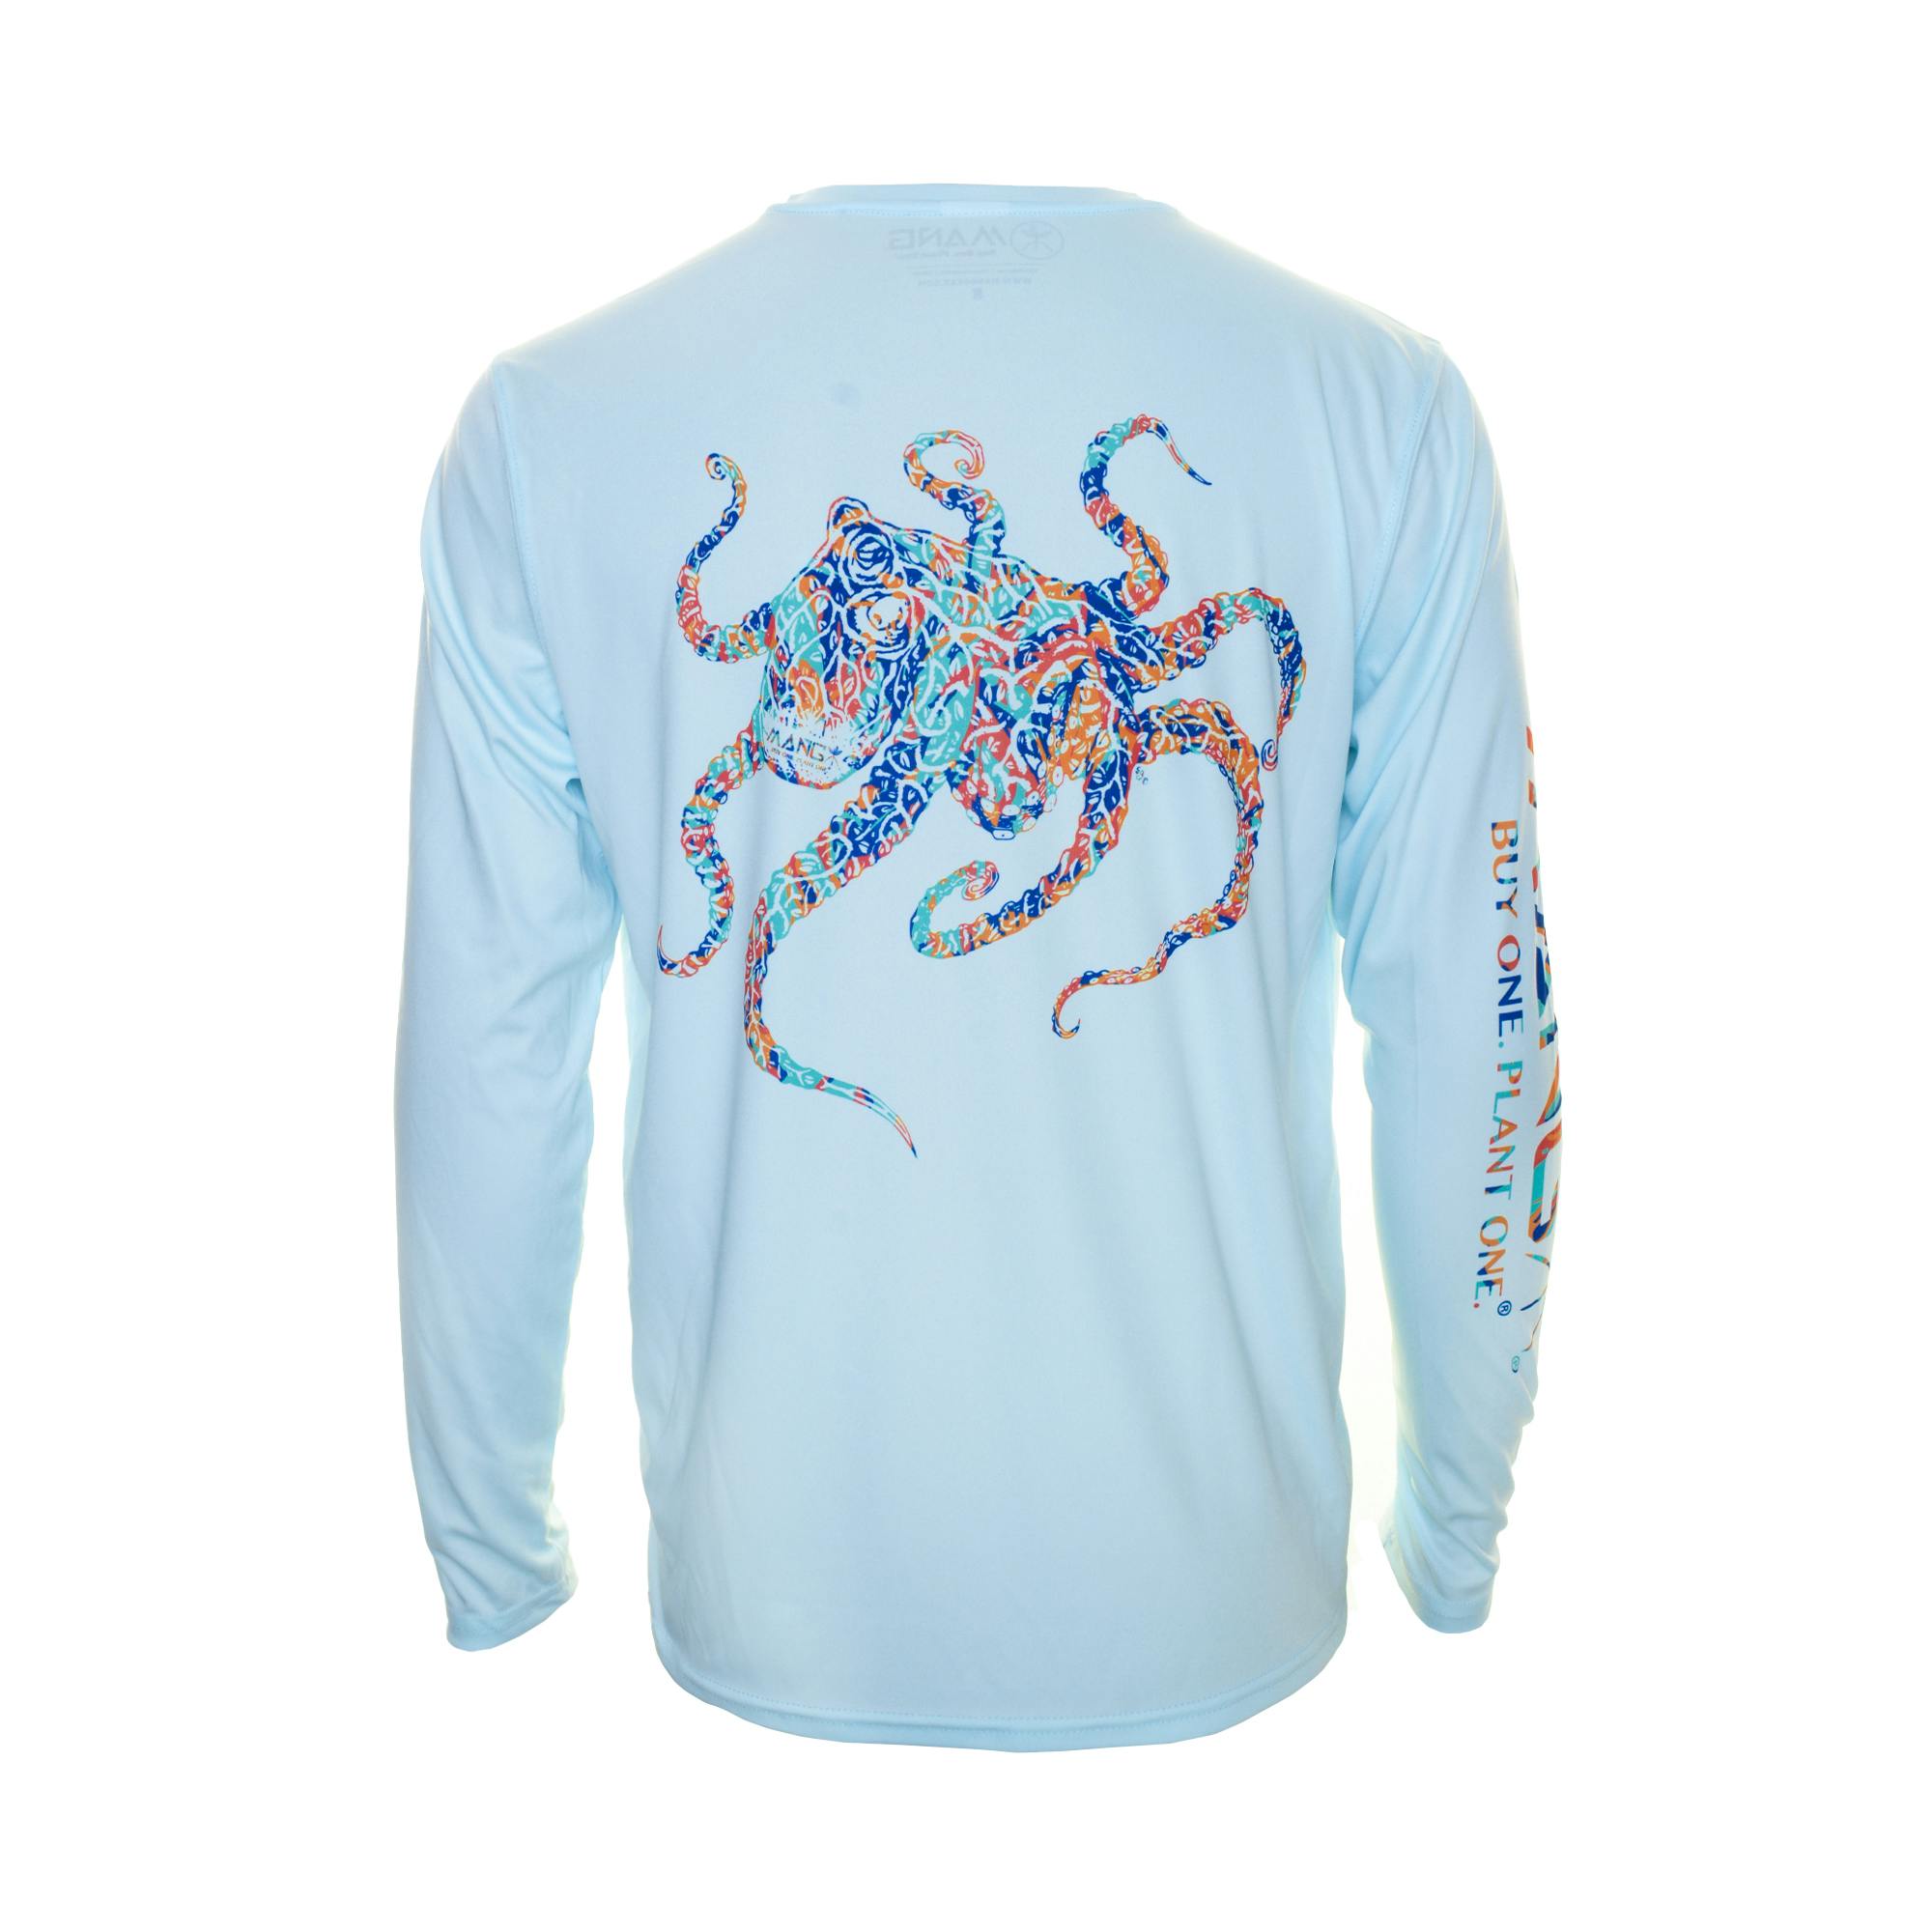 MANG Coral Restoration Octamang Long Sleeve Performance Shirt (Men's) - Artic Blue